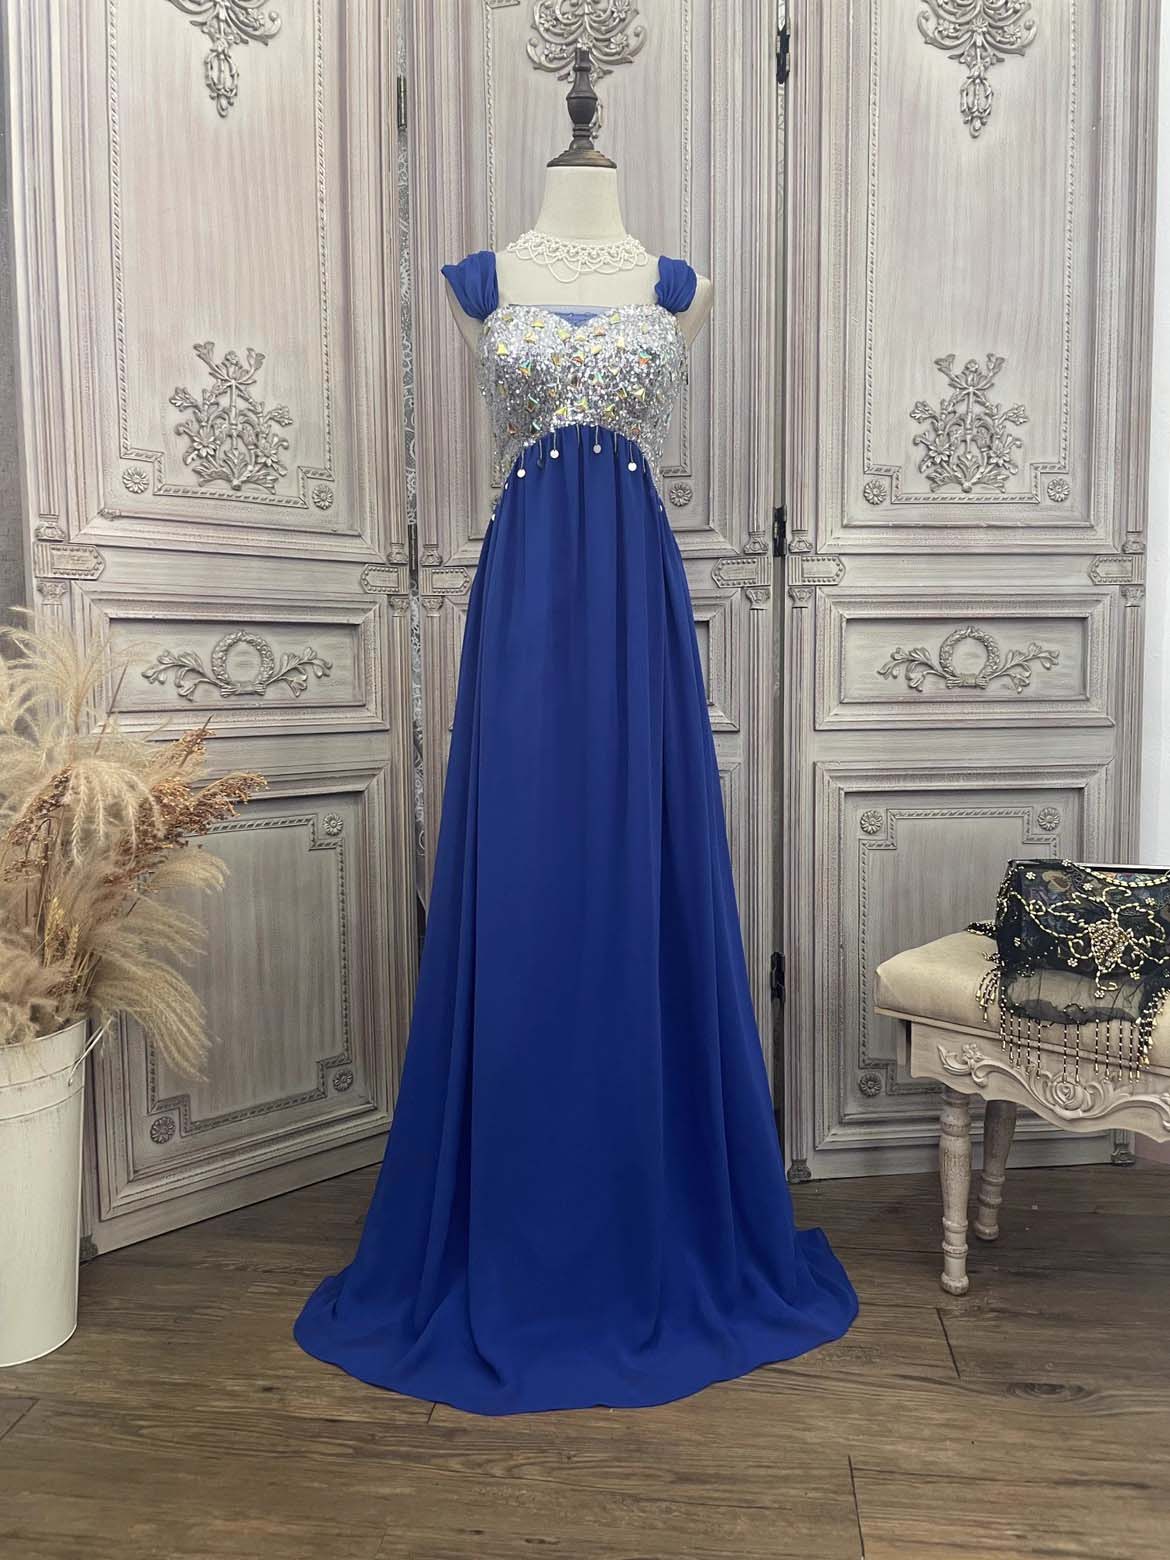 Blue Beads Sequin Dresses Women Party Companies (3)